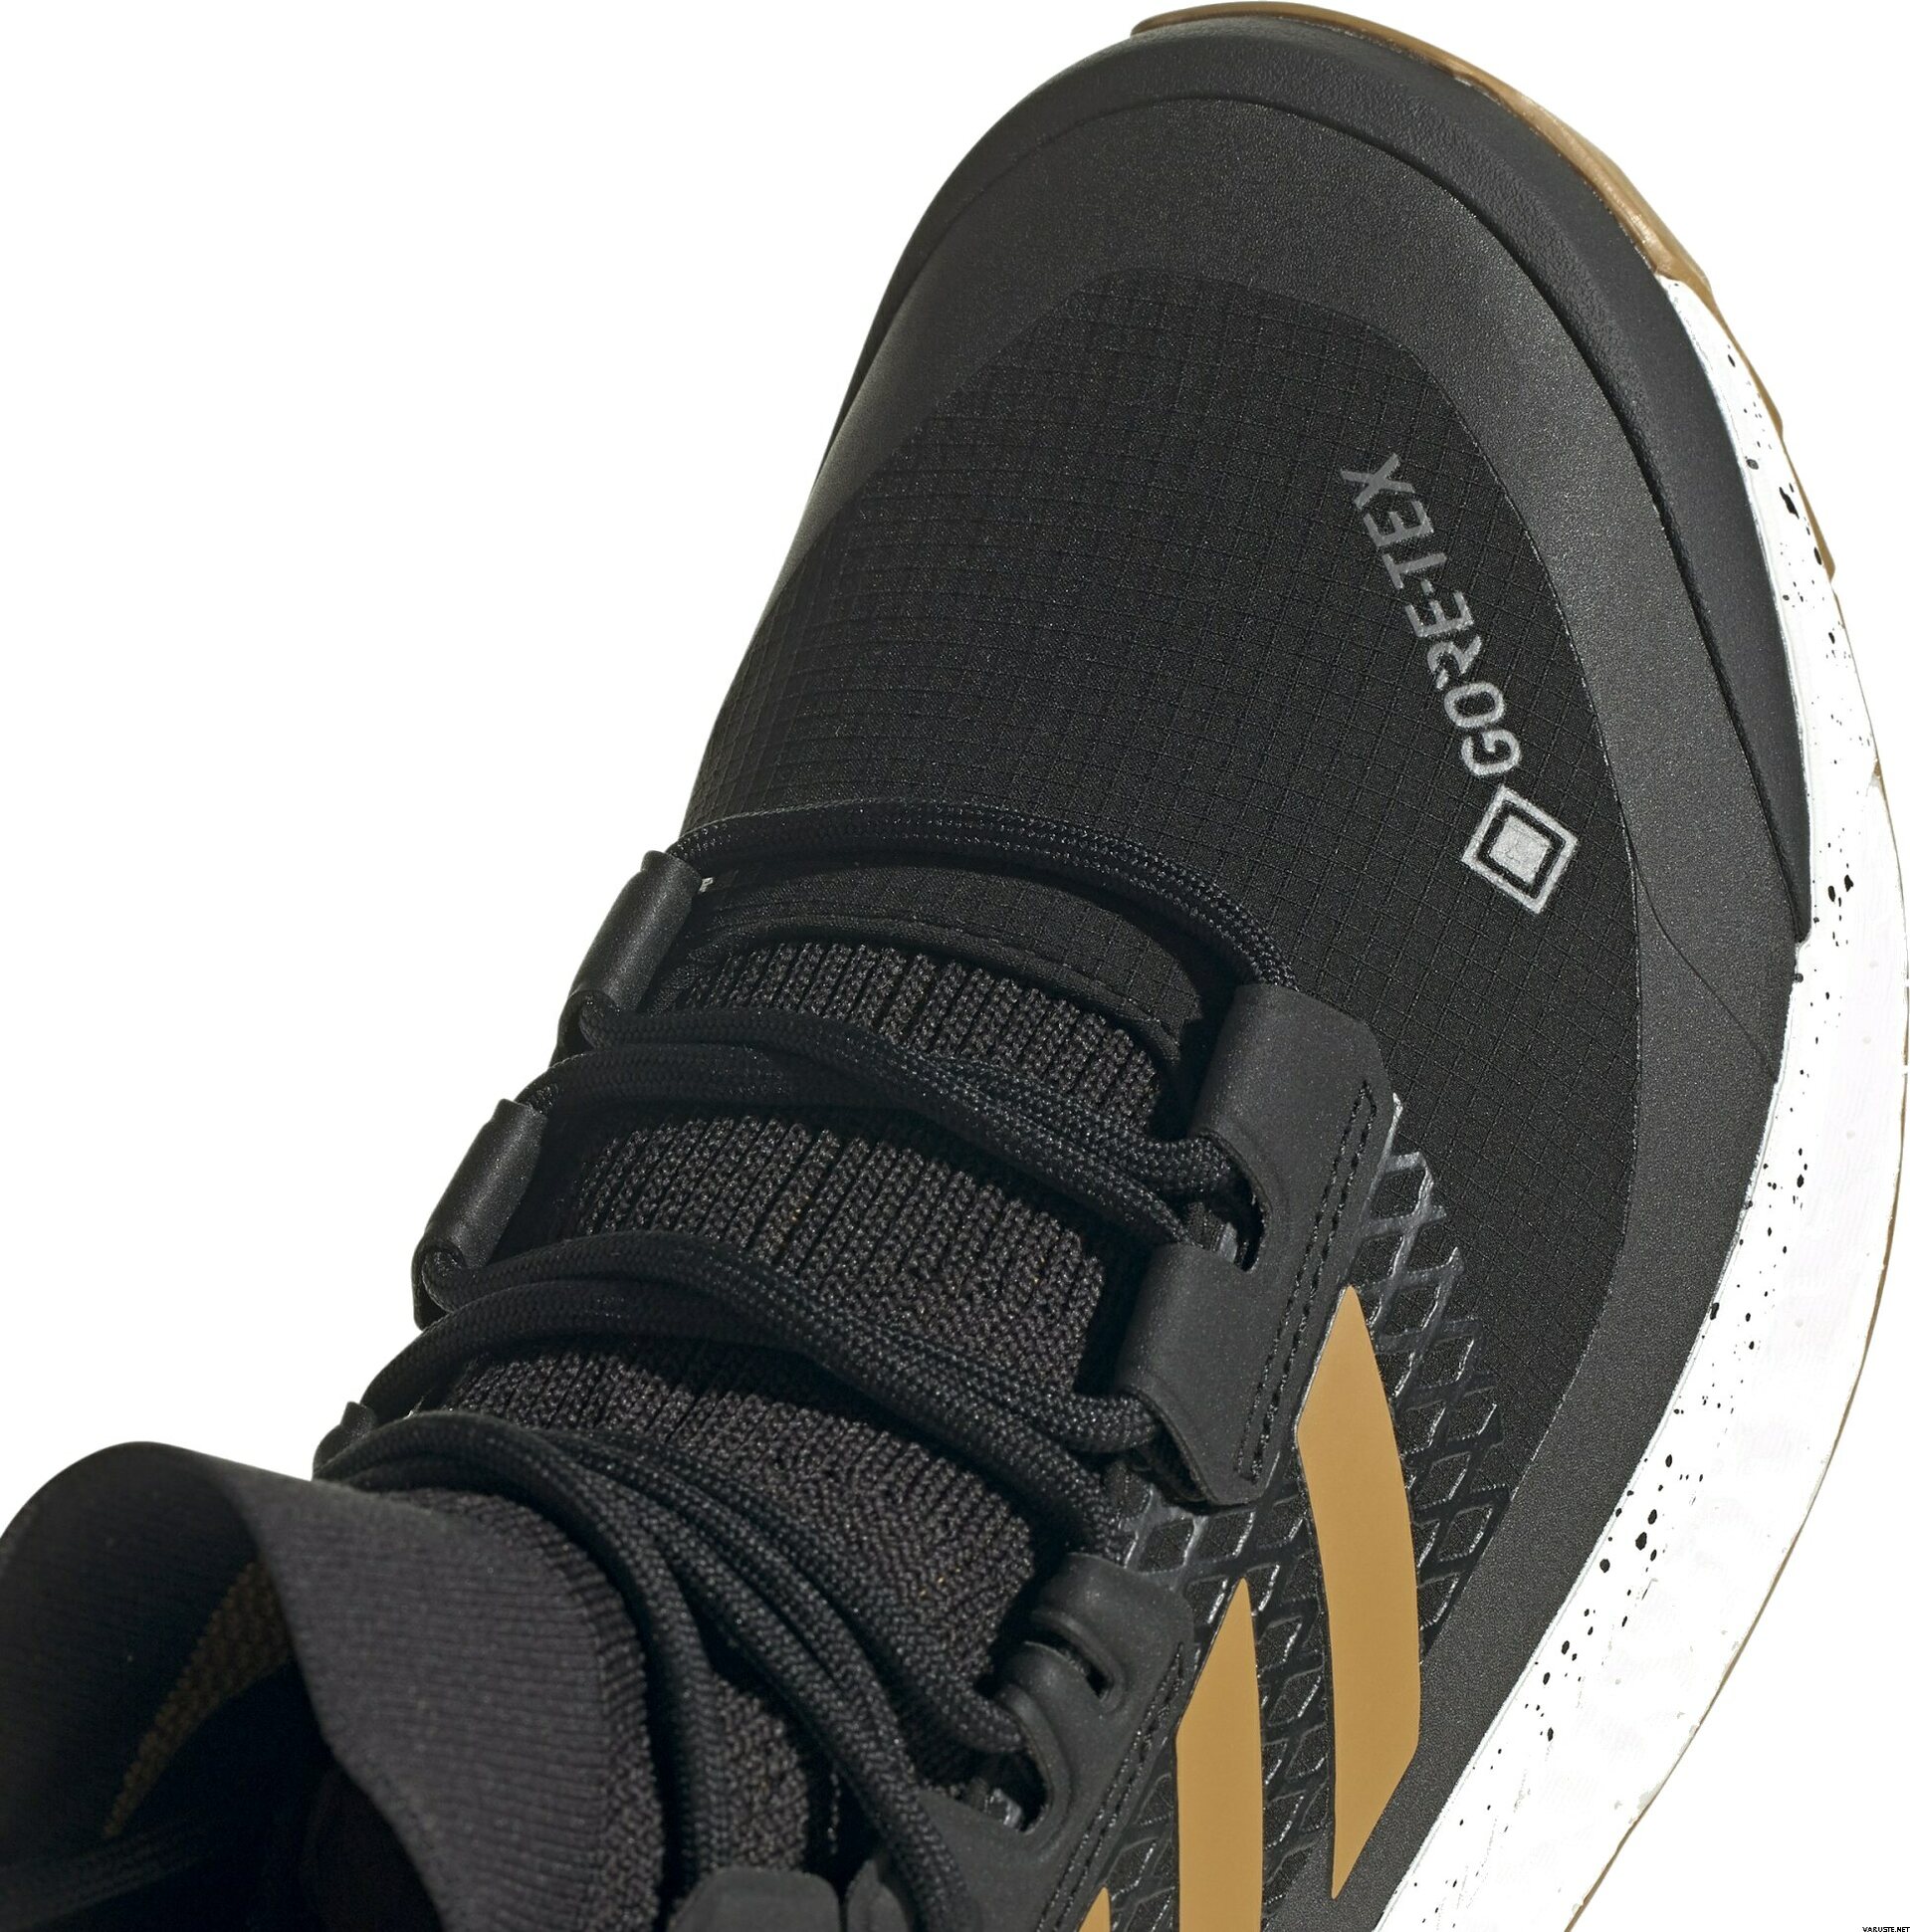 Adidas Terrex Free Hiker GTX | Men's mid cut hiking boots with 